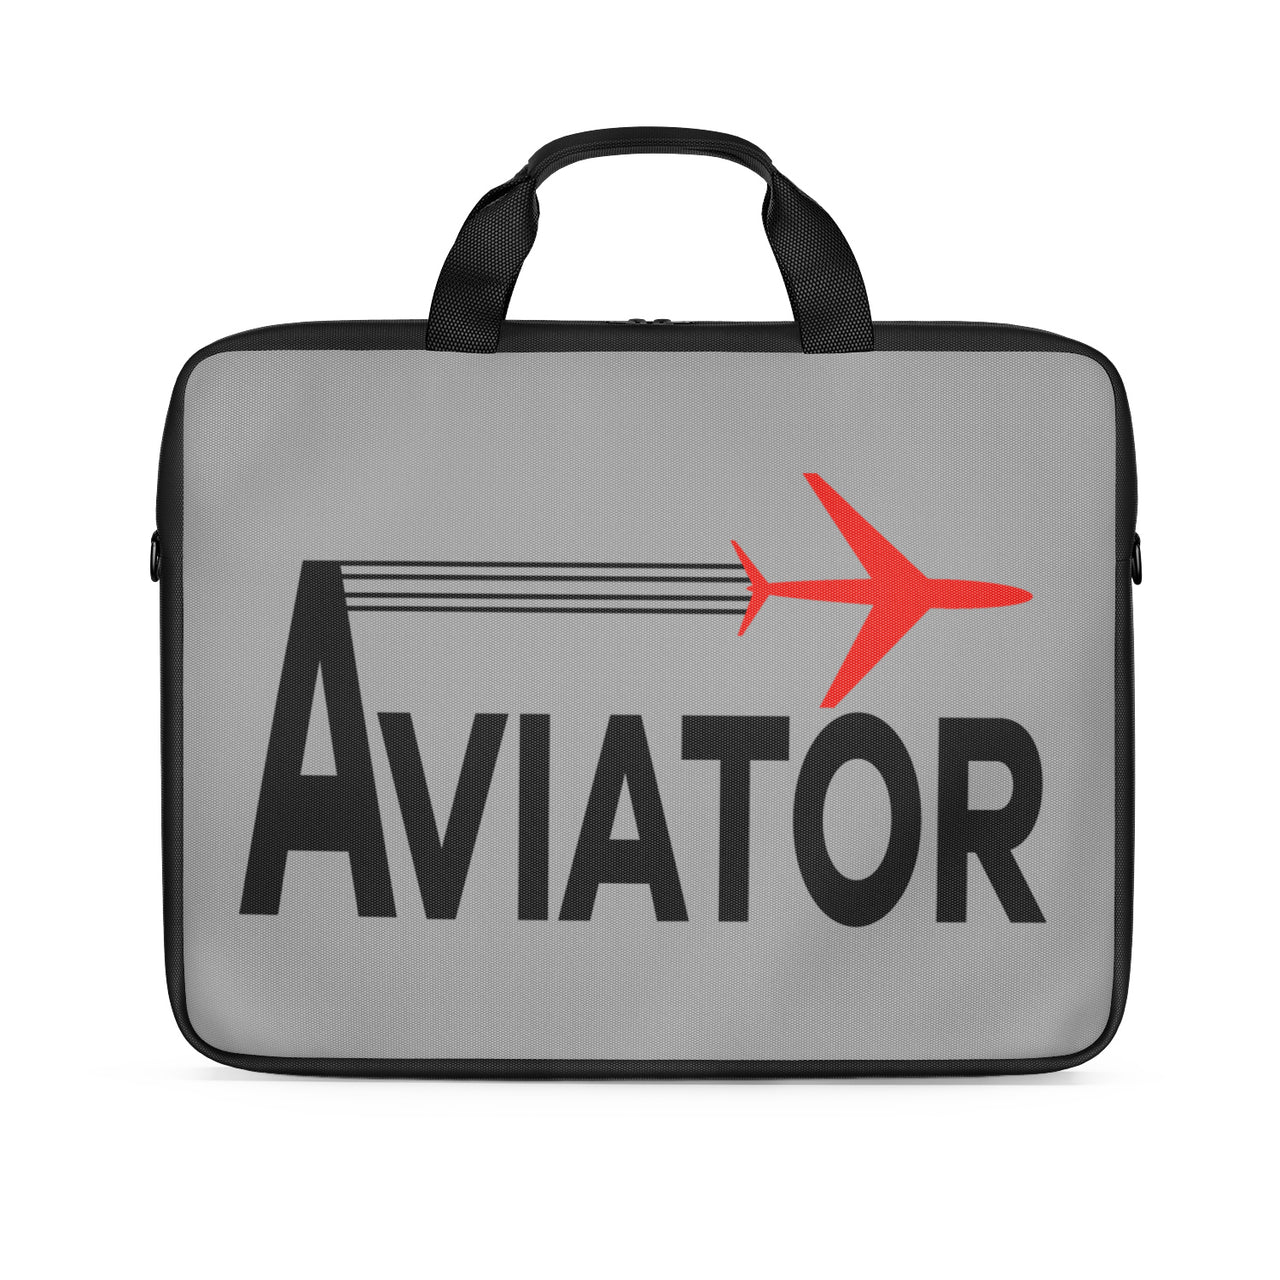 Aviator Designed Laptop & Tablet Bags